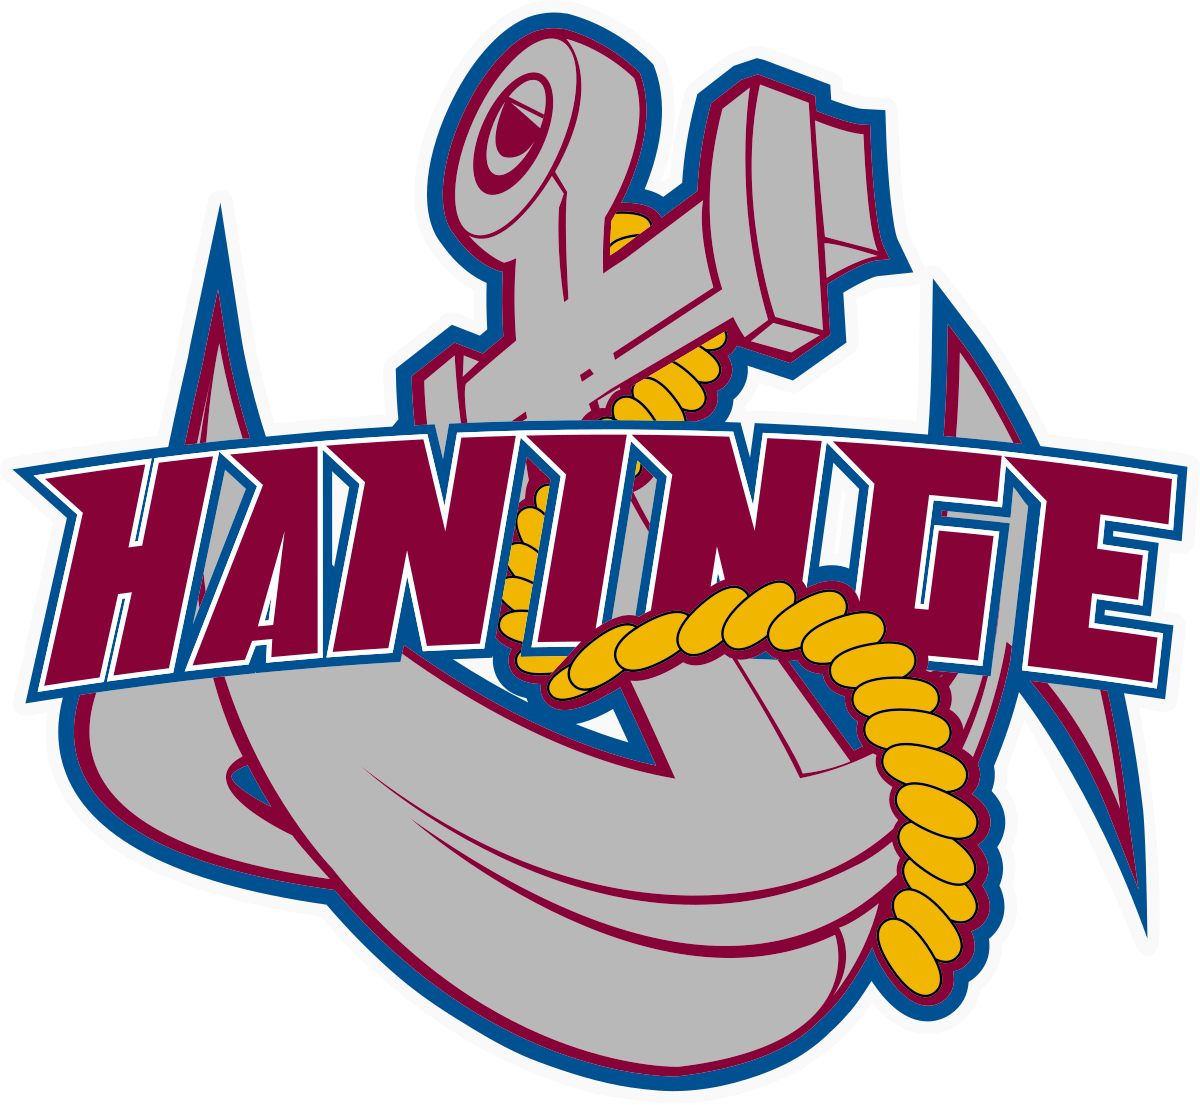 Haninge_Anchors_HC_logo.svg.png